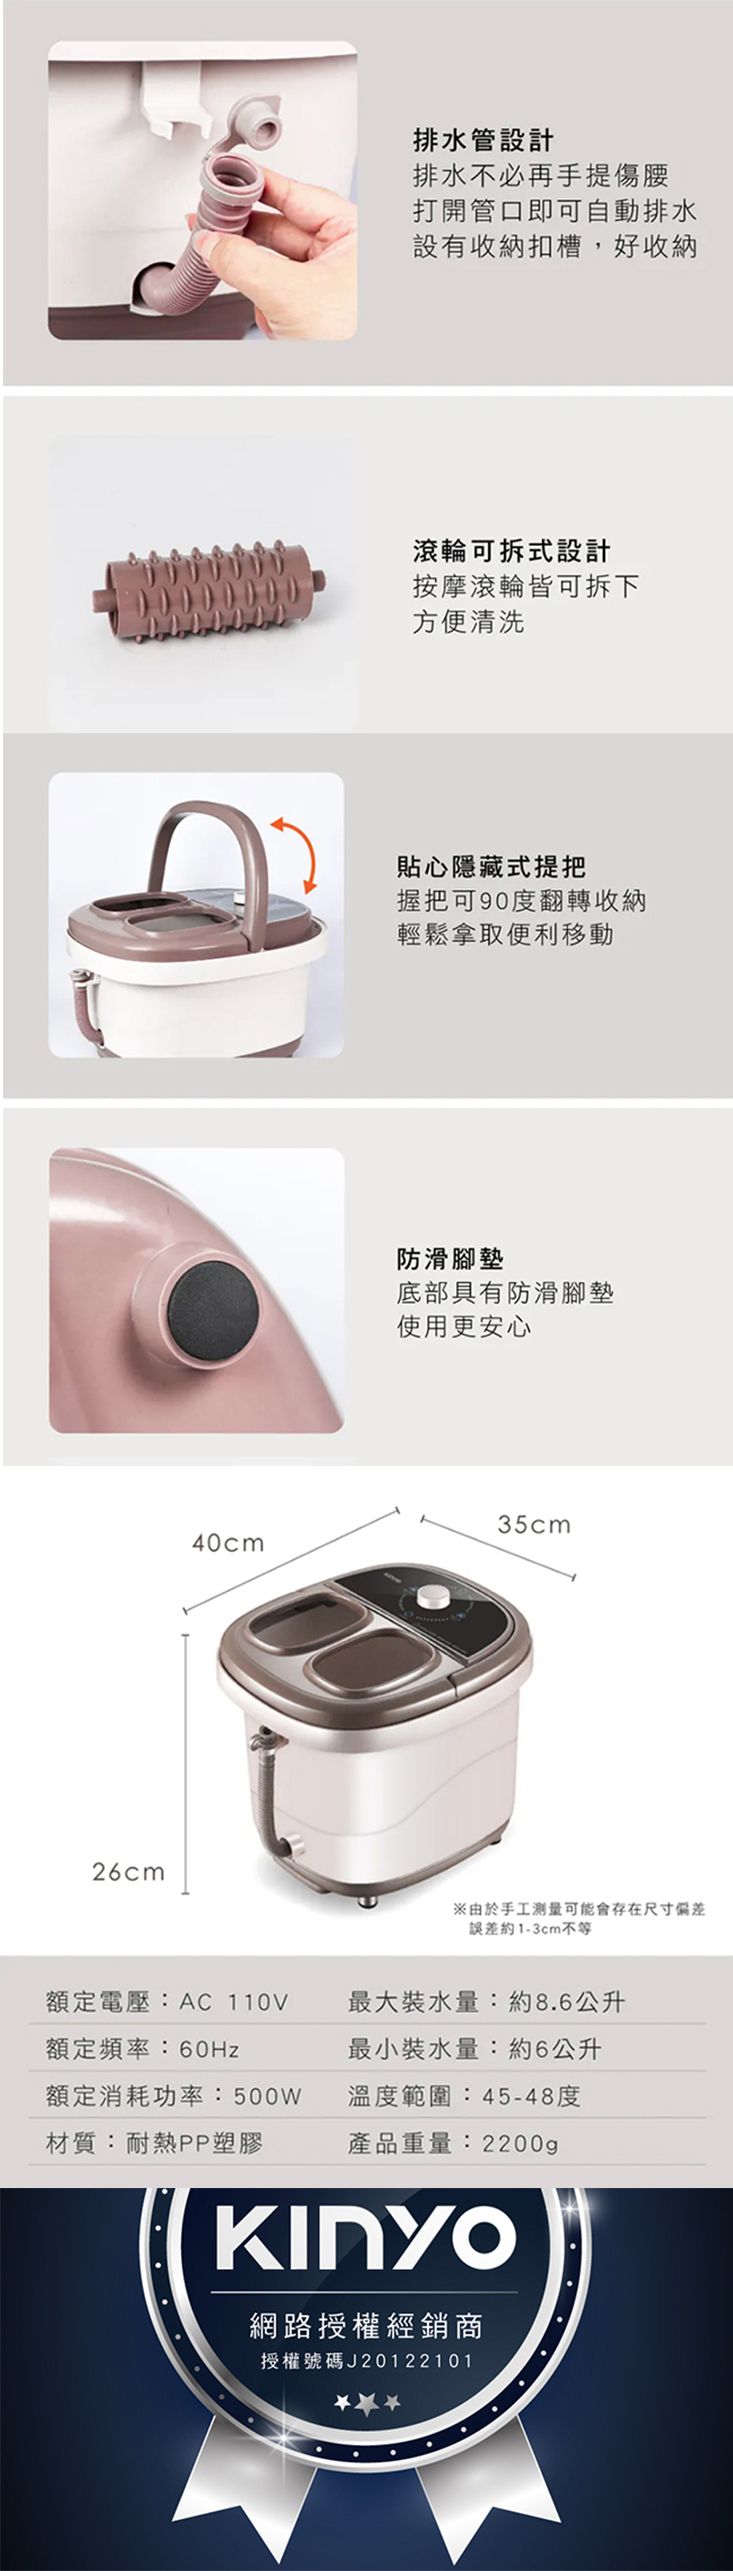 【KINYO】 PTC陶瓷紅光拆蓋式按摩泡腳機(IFM-6001)